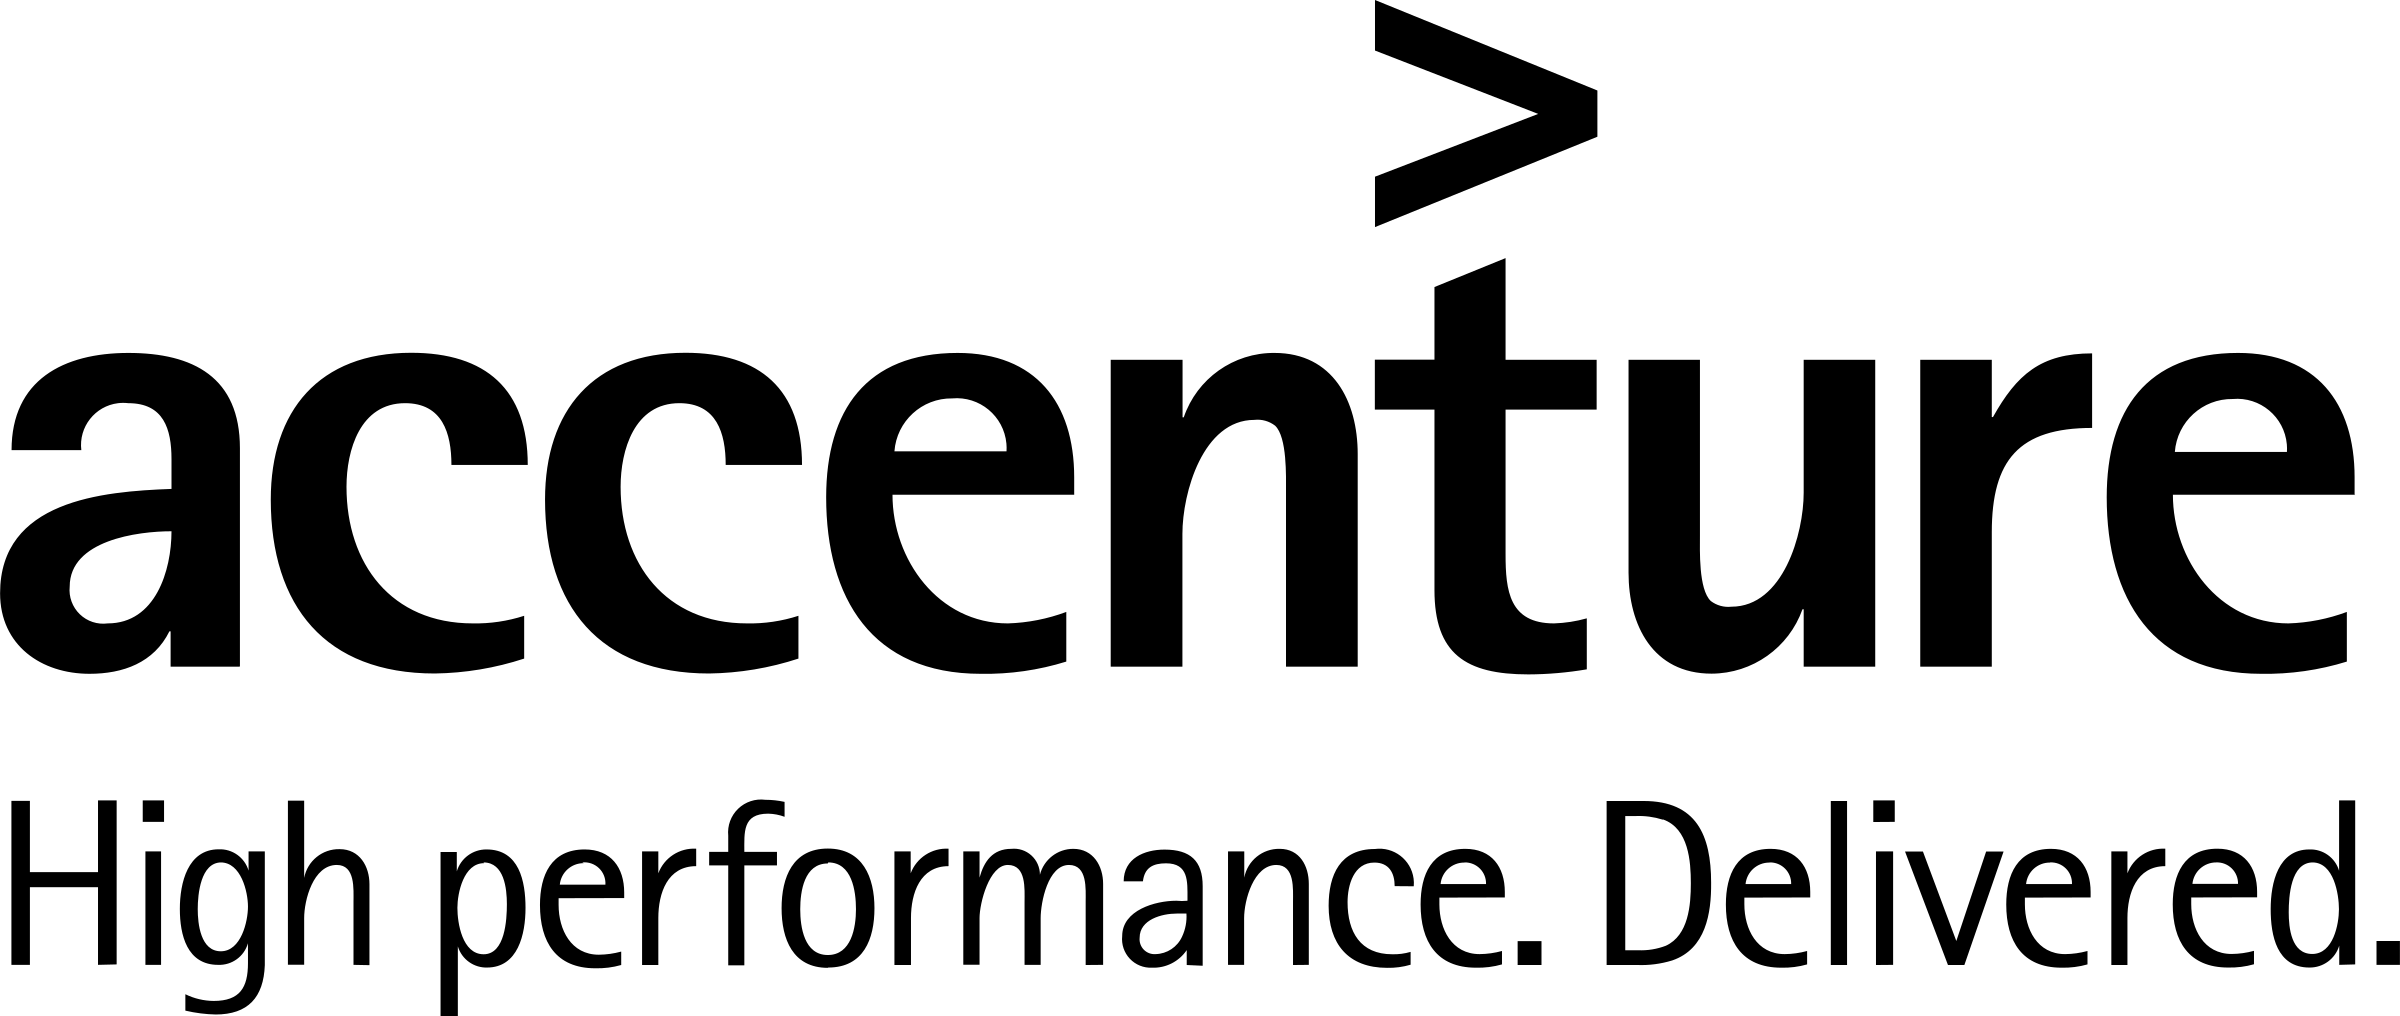 Accenture Logo PNG Transparent & SVG Vector.